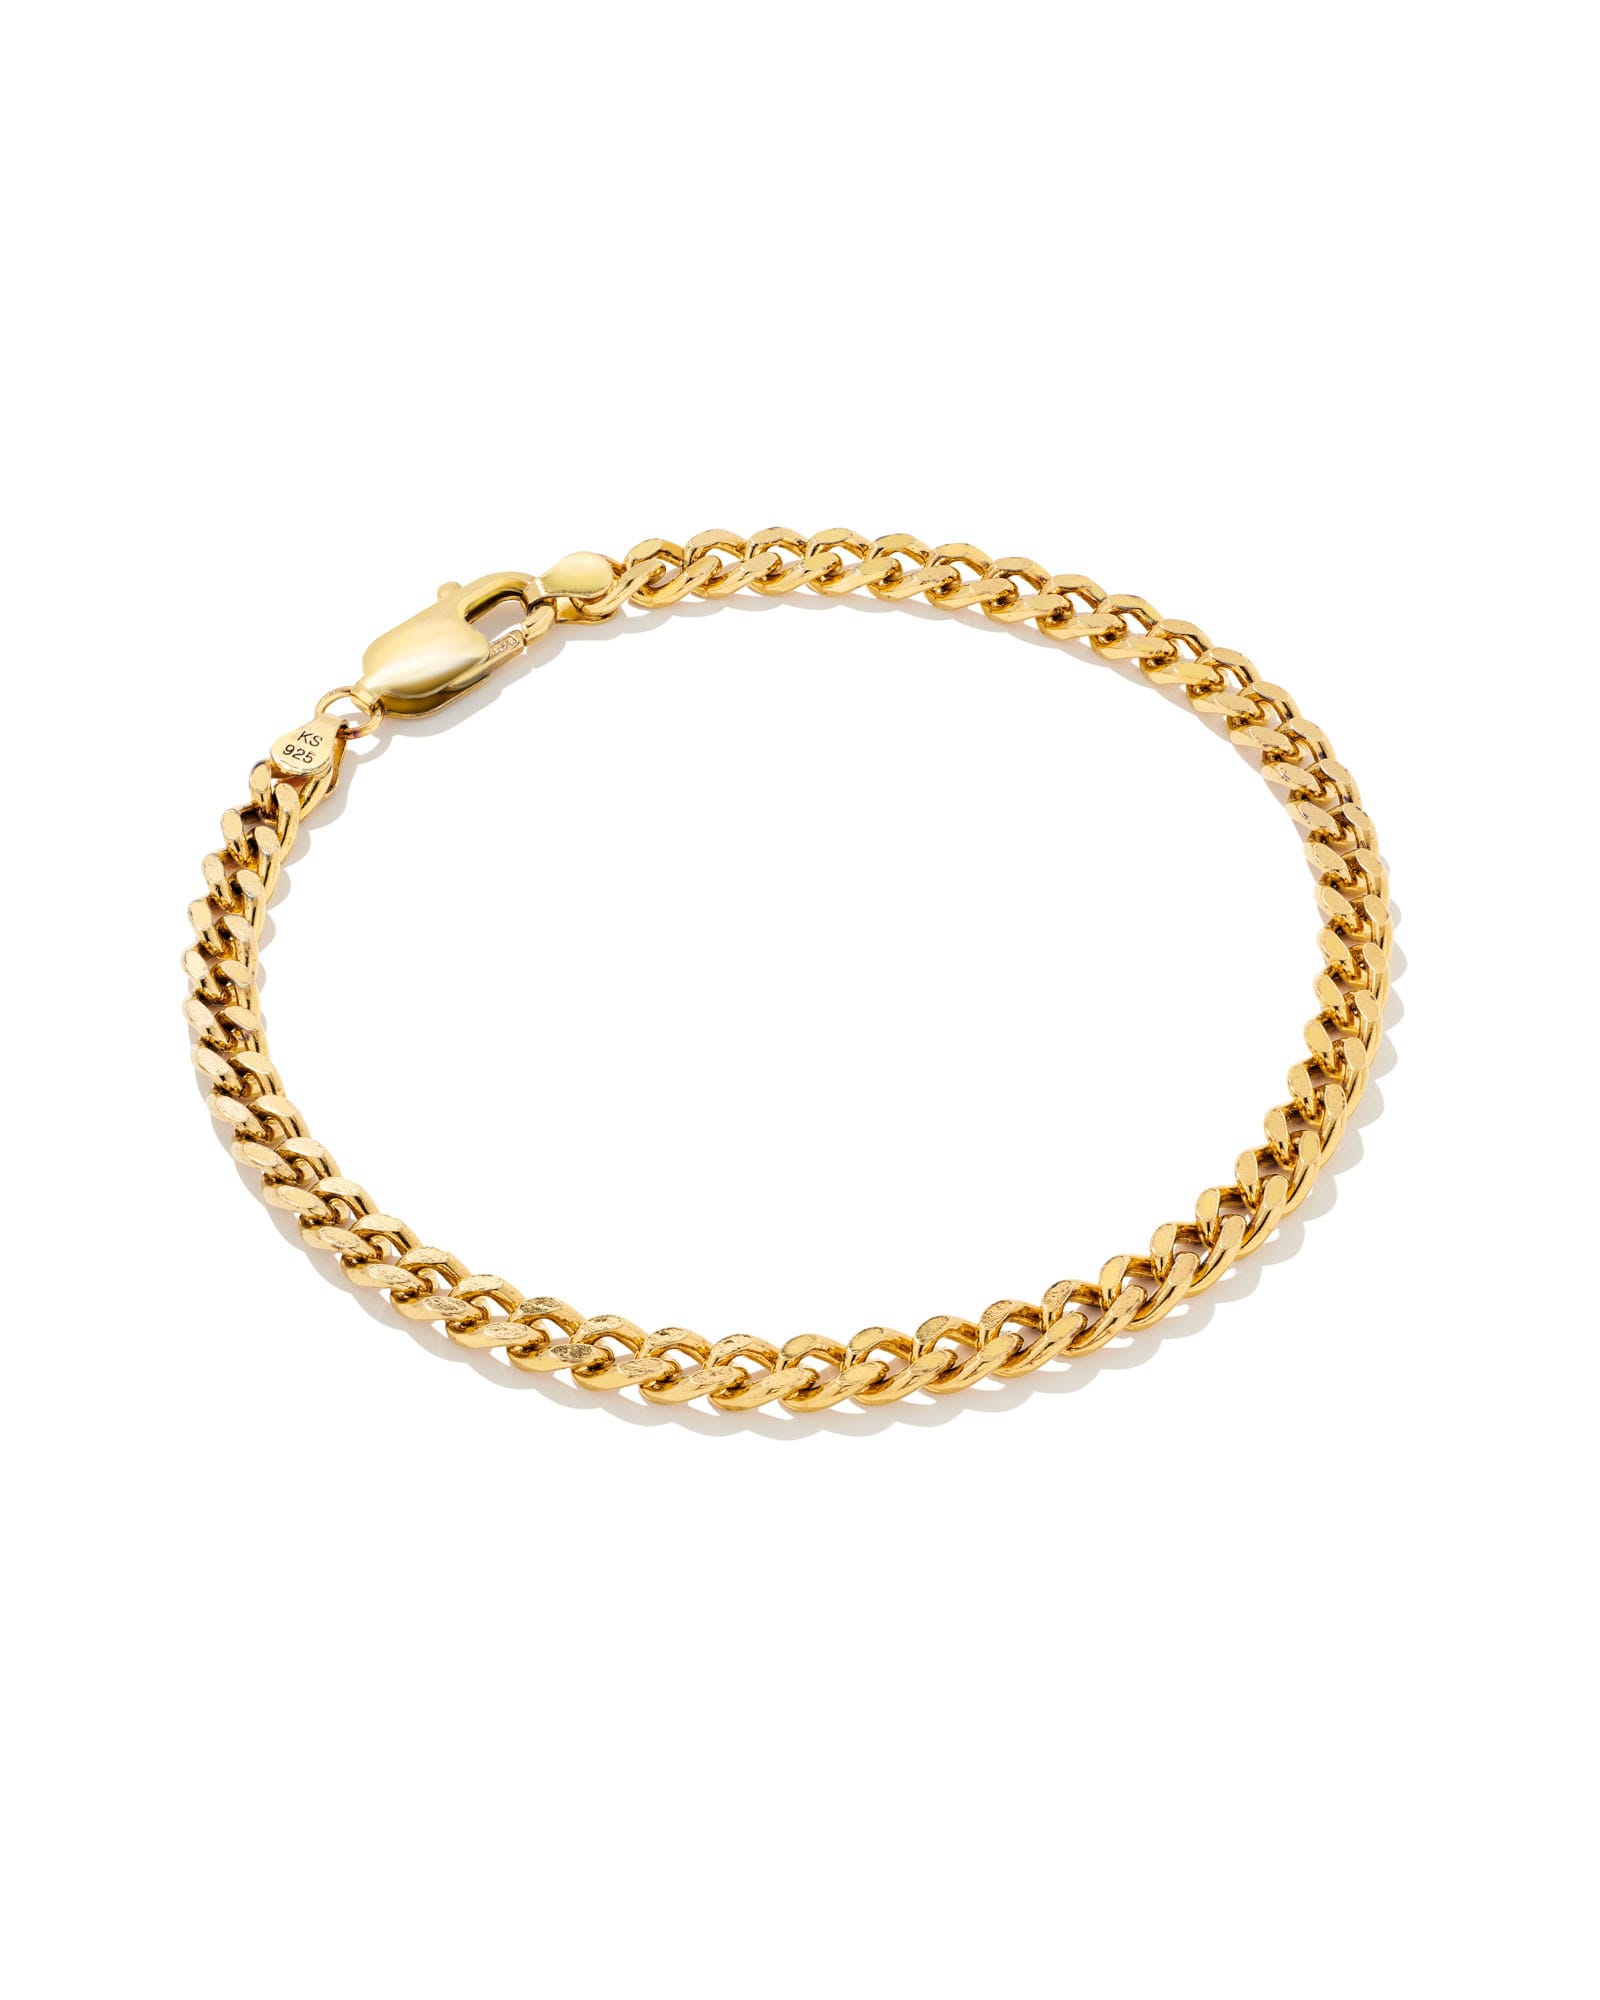 Regard Jewelry - 18k Yellow Gold Cuban Link Bracelet at